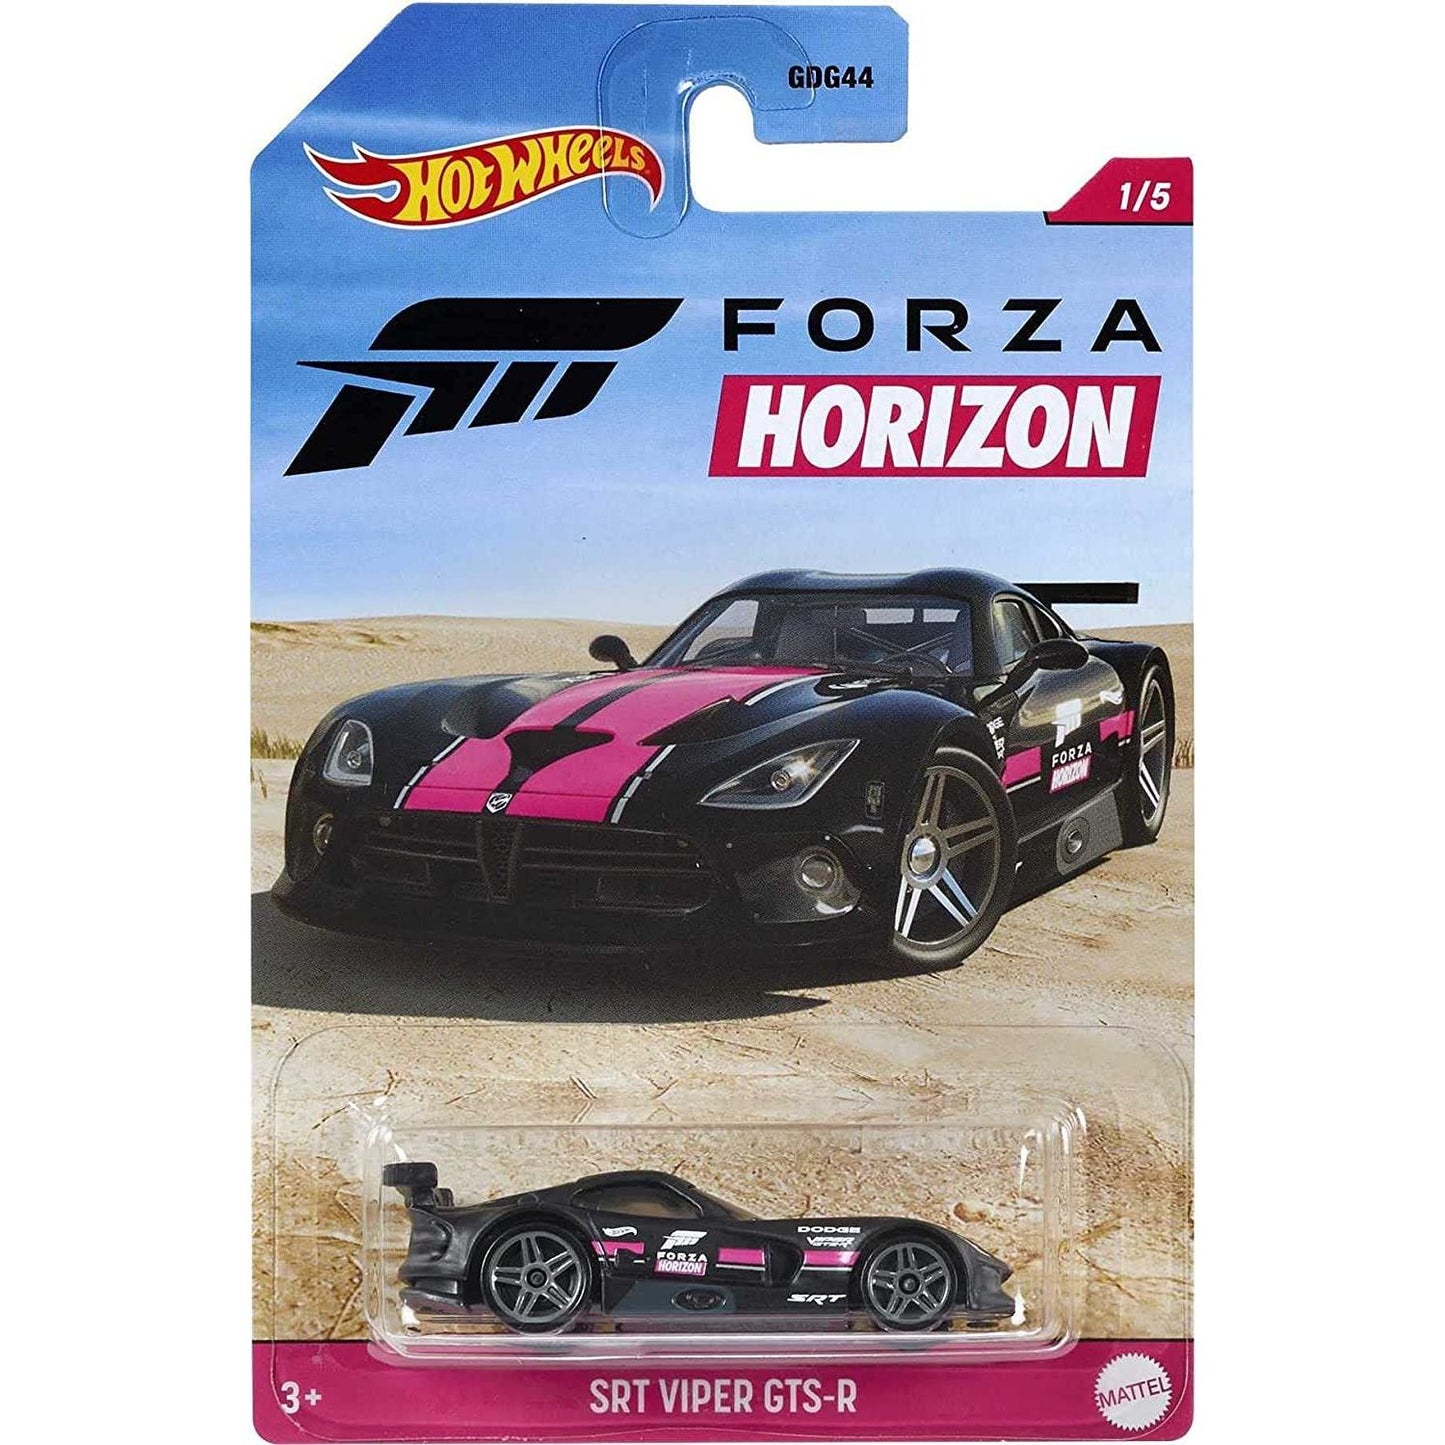 HotWheels | Forza Horizon | 1/5 SRT VIBER GTS-R | GDG44